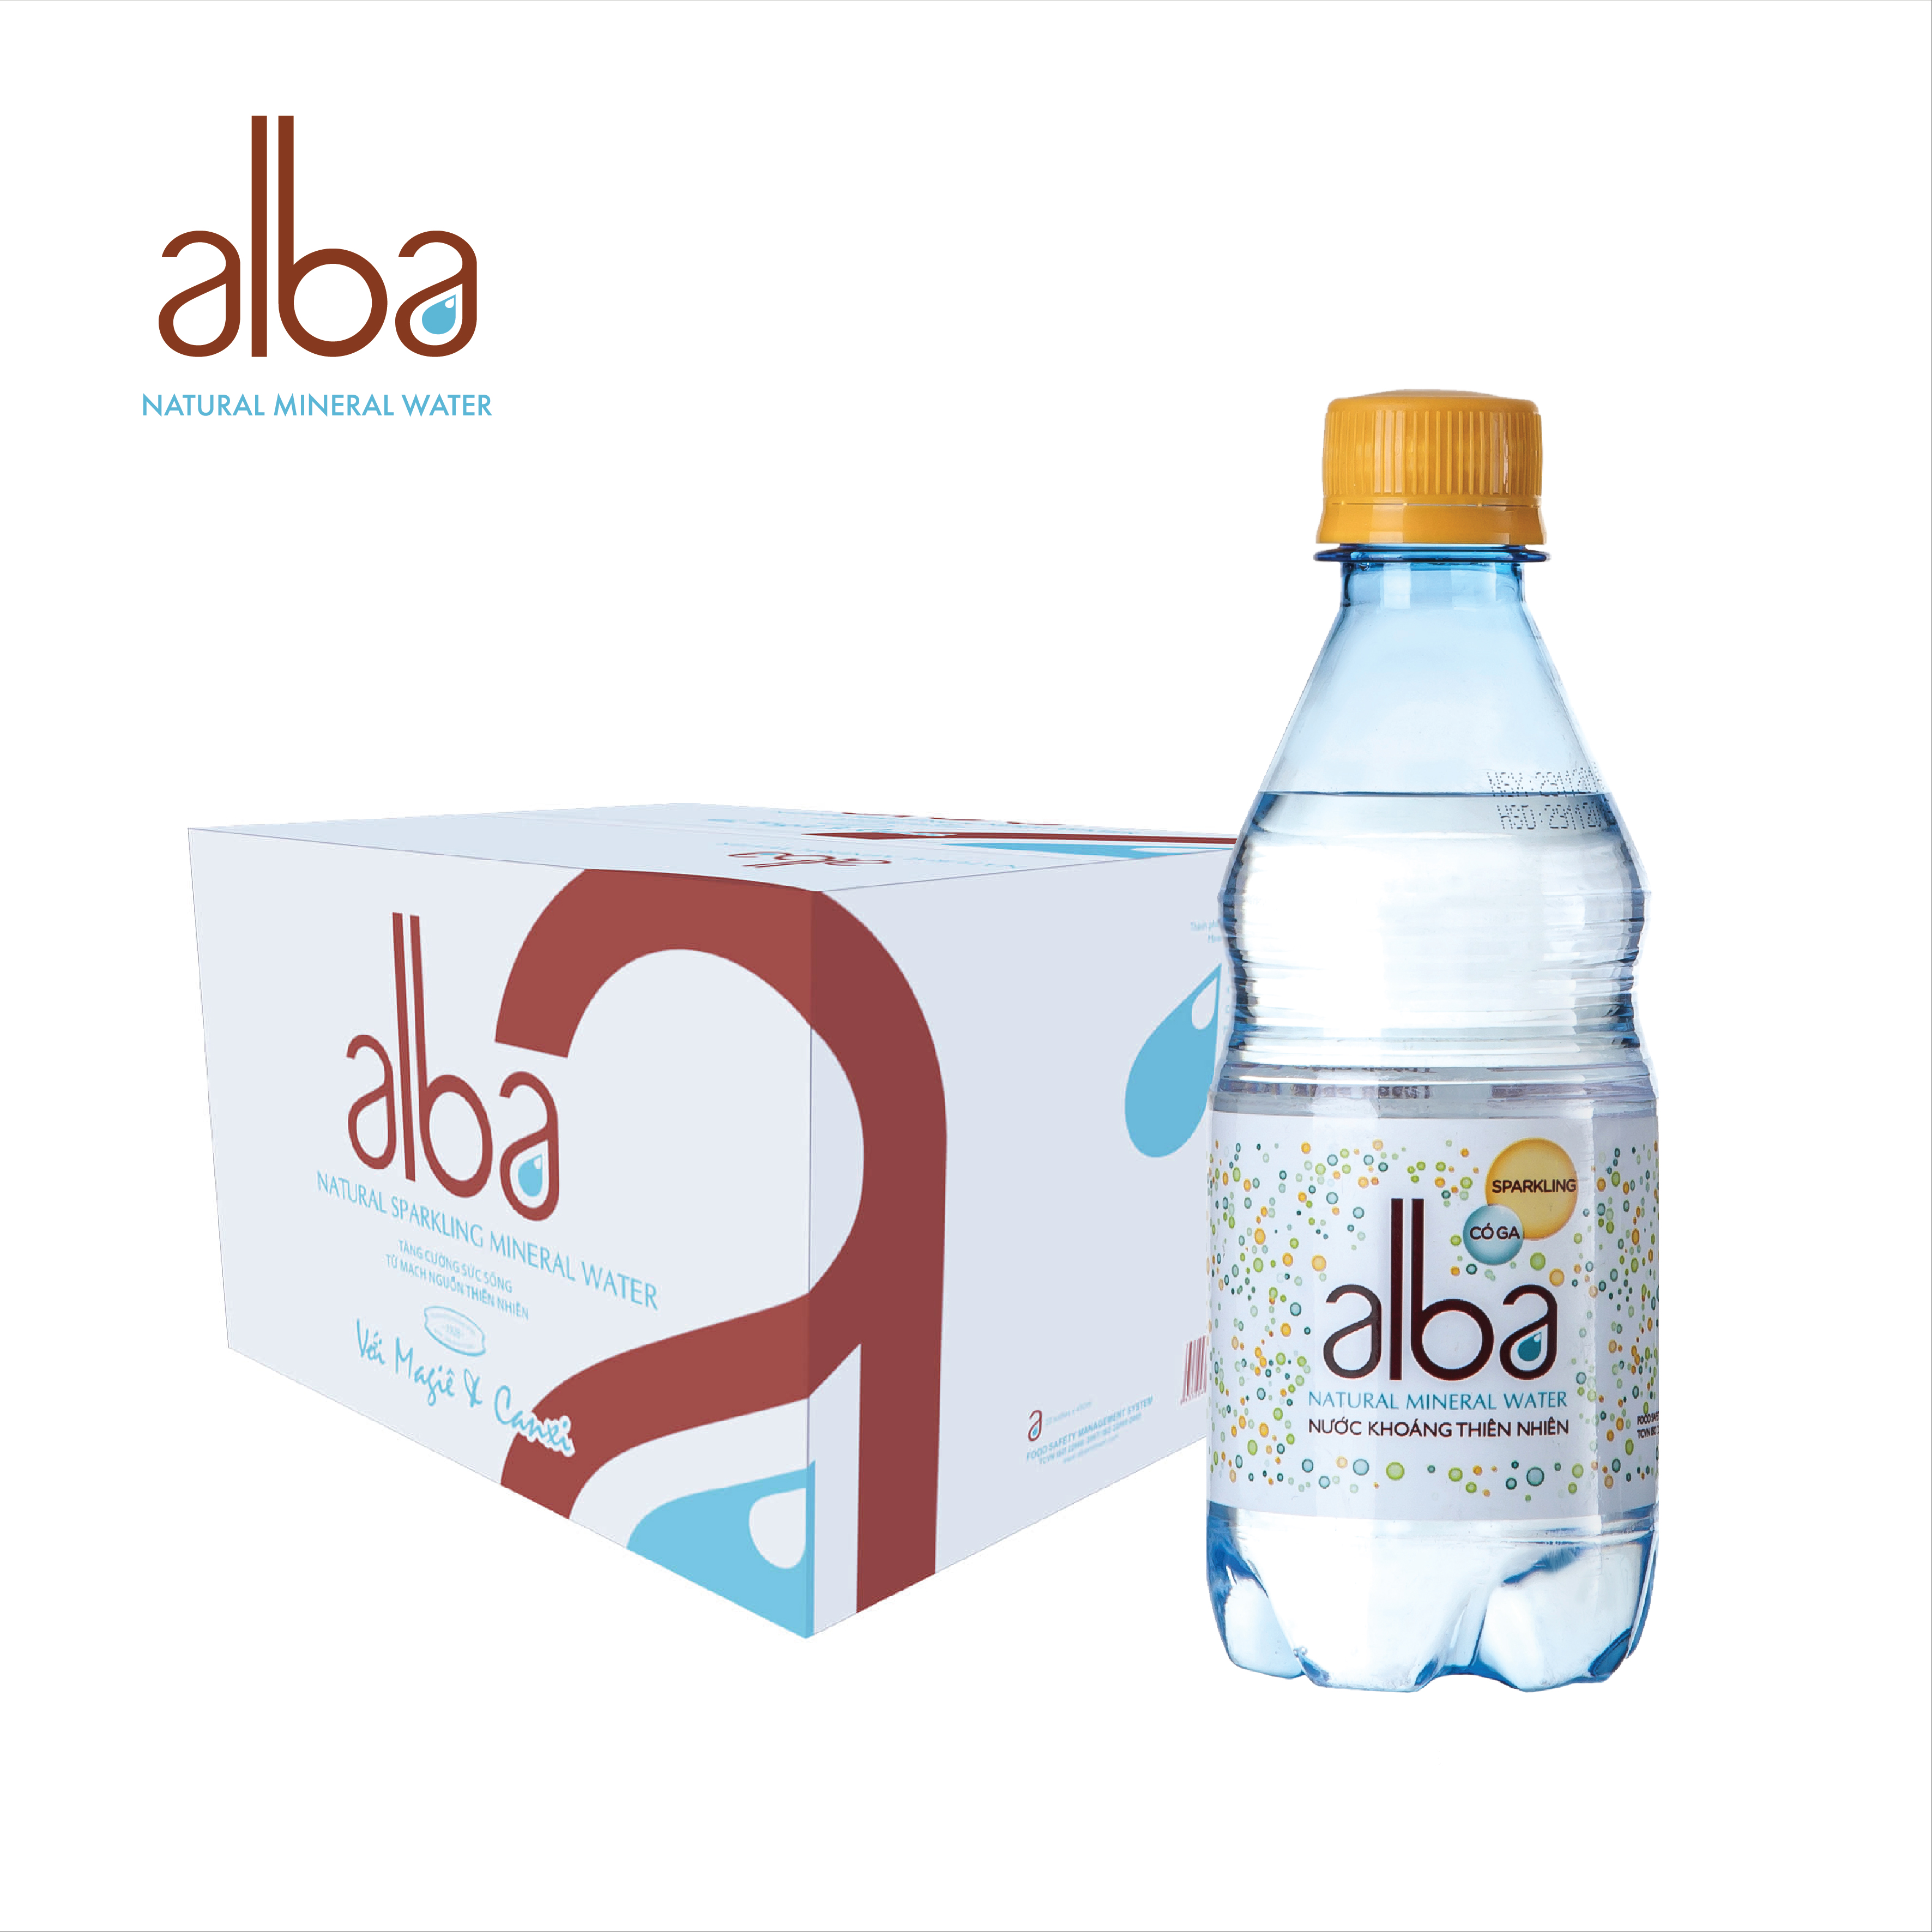 Alba Sparkling Mineral Water 350ml PET Bottle